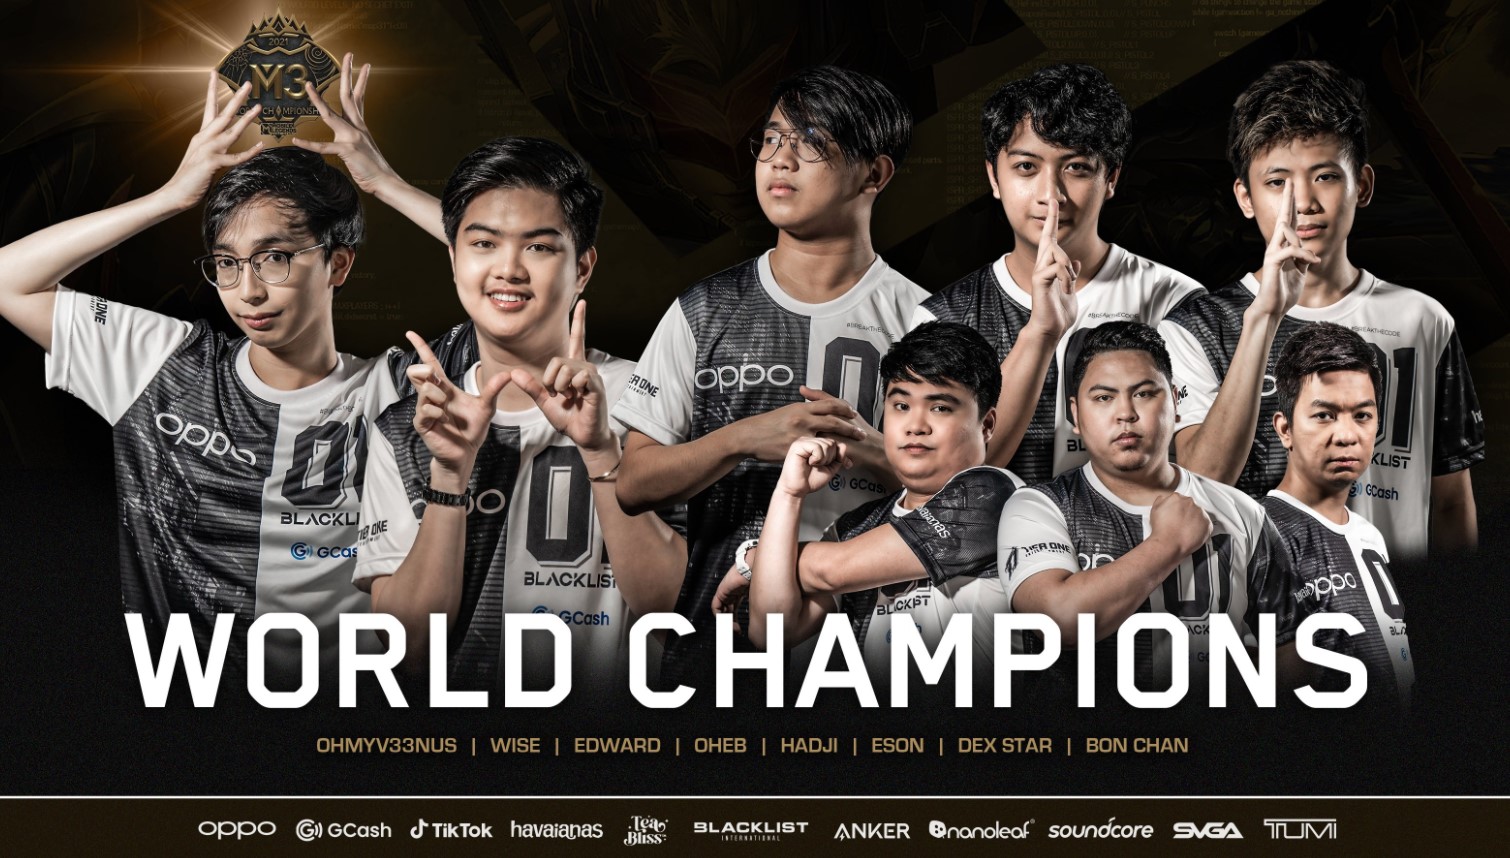 M3 world championship